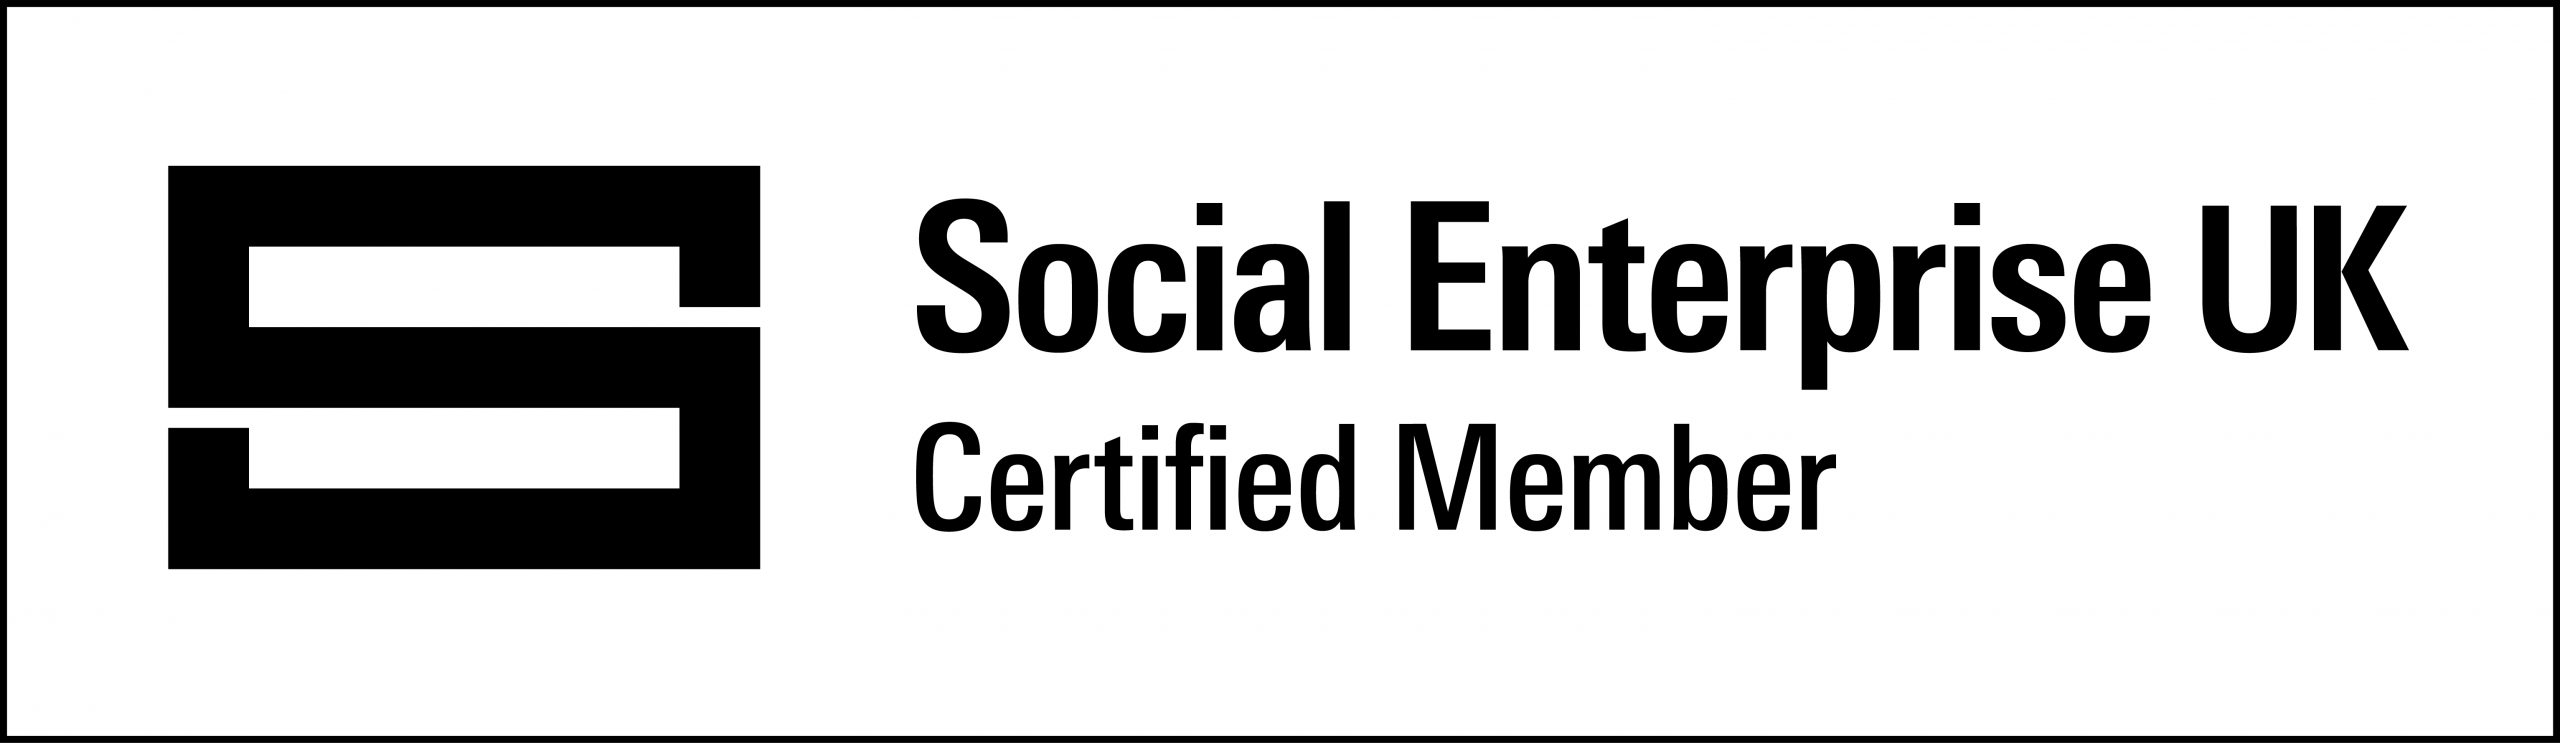 Certified-Social-Enterprise